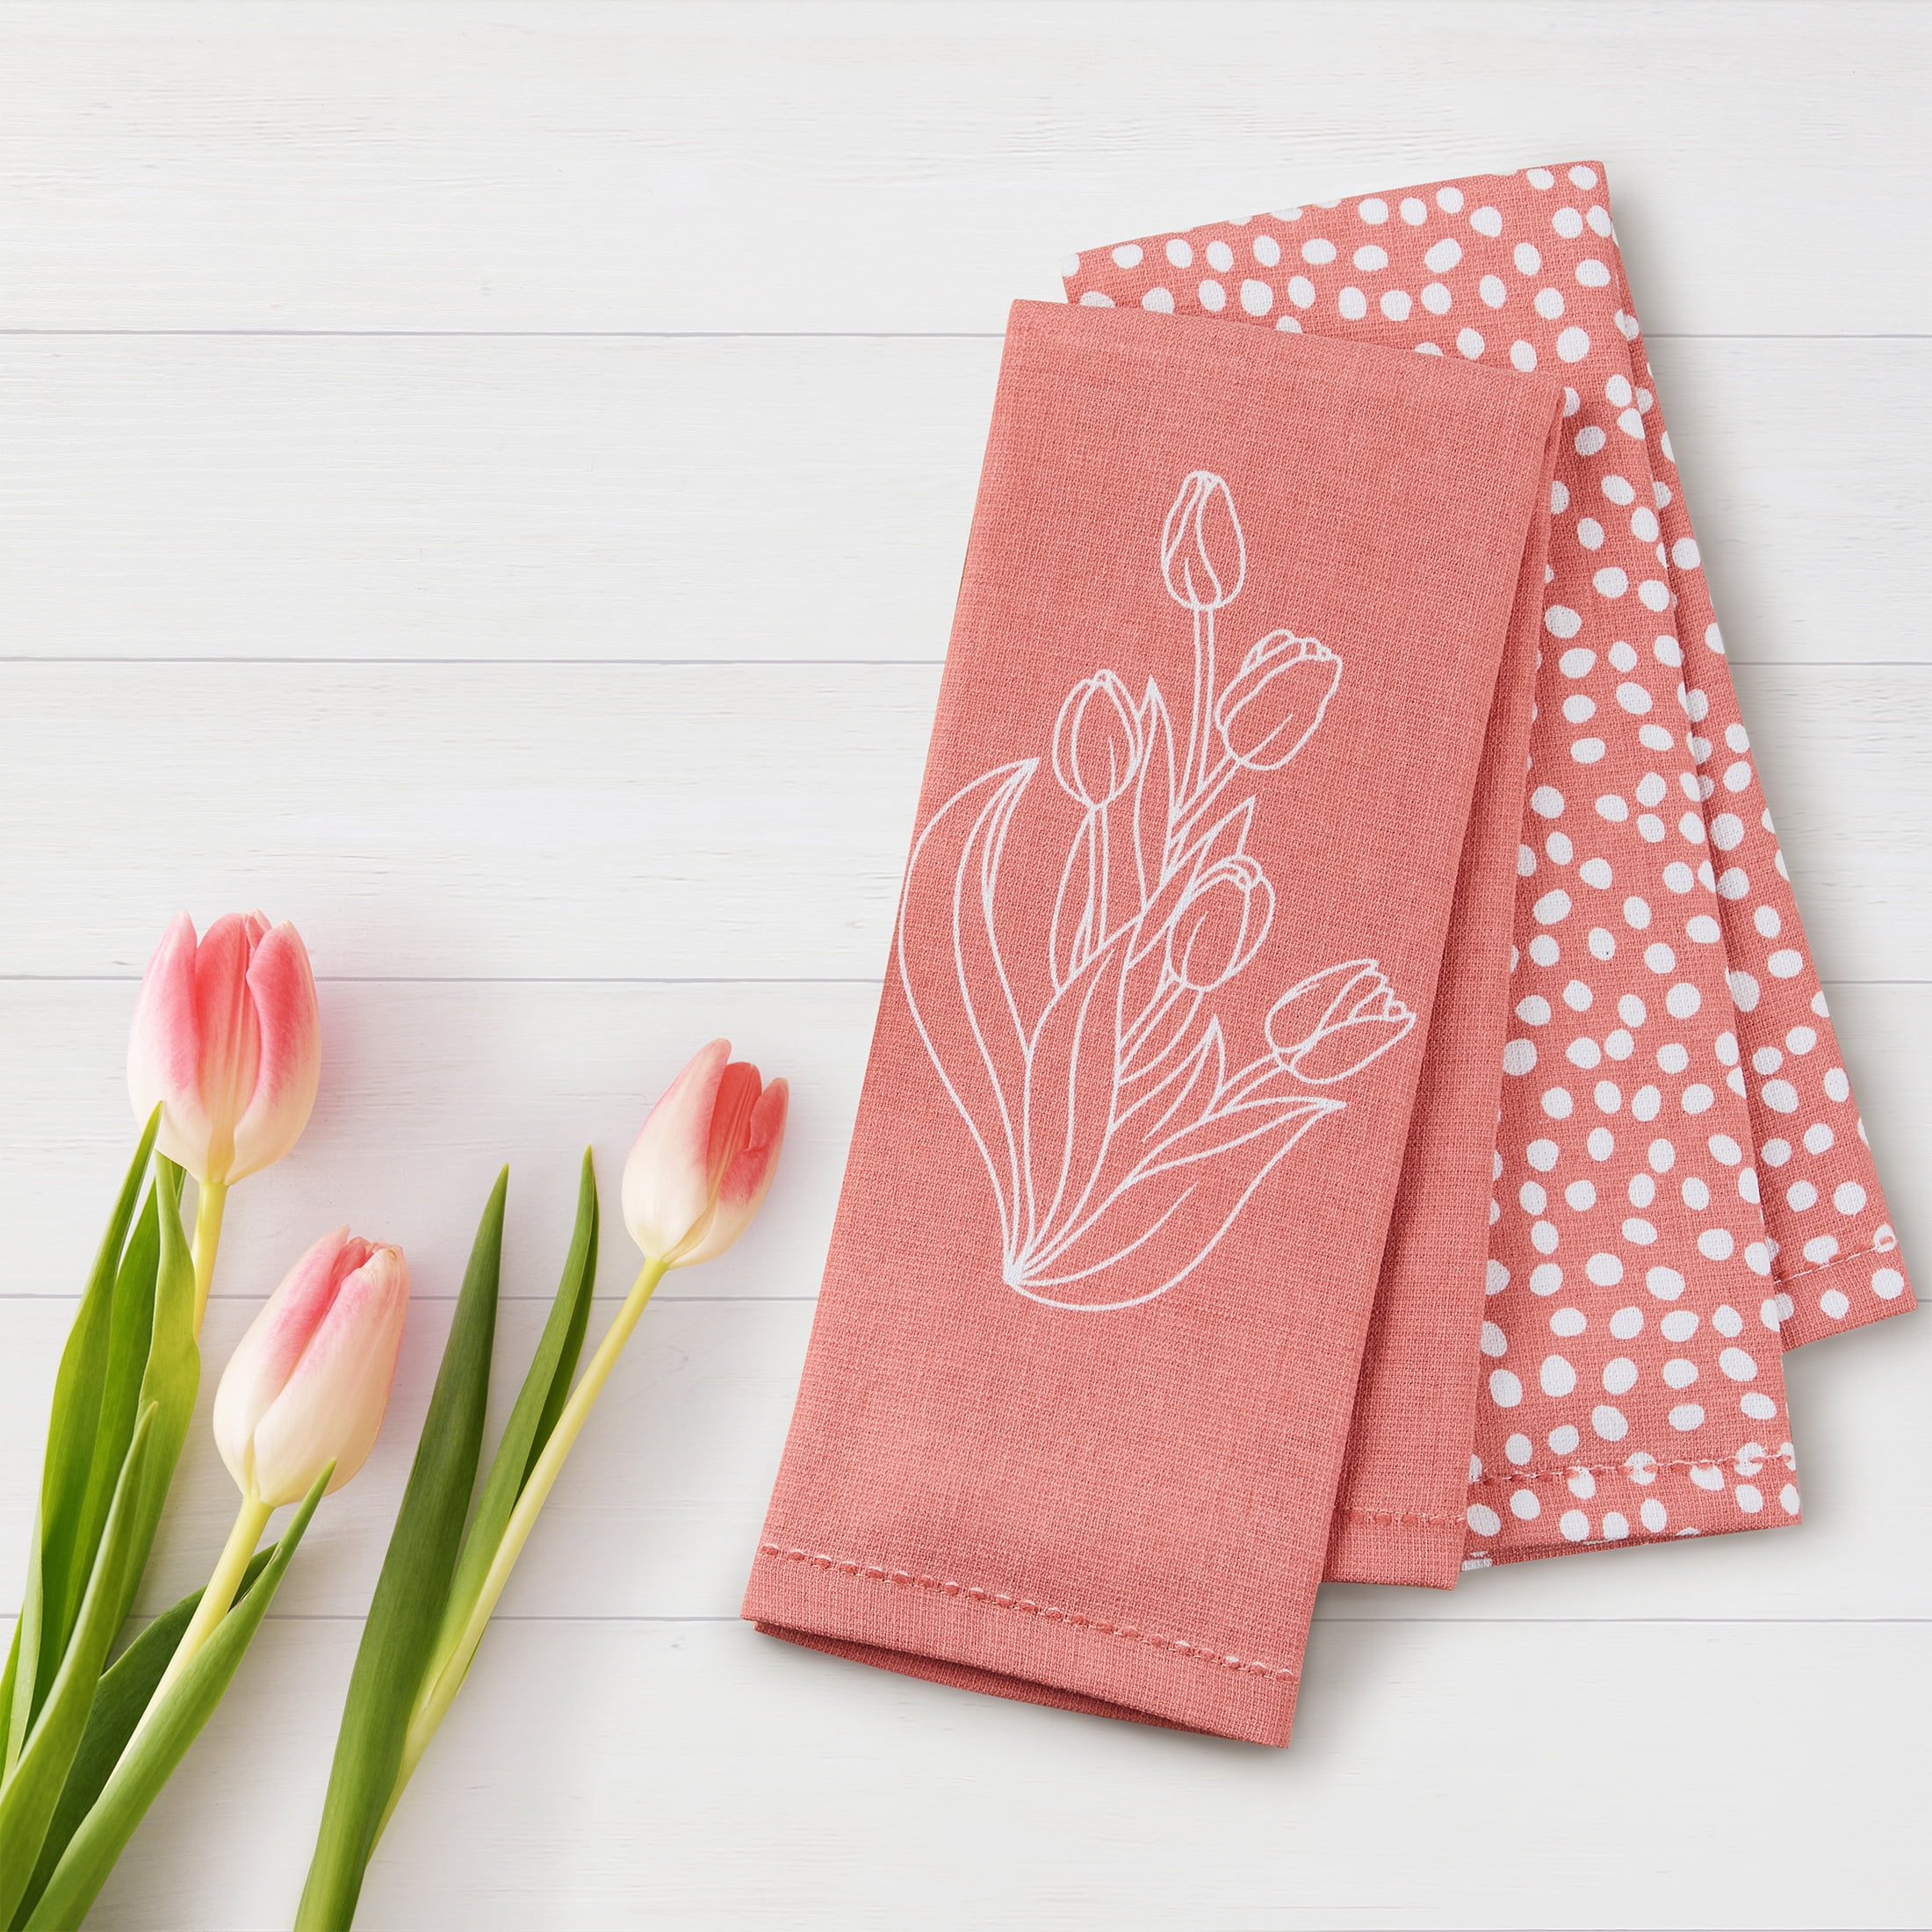 Way To Celebrate Tulips 15 X 25 Cotton Kitchen Towels 2 Pieces Pink White Abe8d7a3 Bfa9 498d 887b Bdef1d8b2462.b6f0a7073786d5ceb7c61433ff4a7ffd 